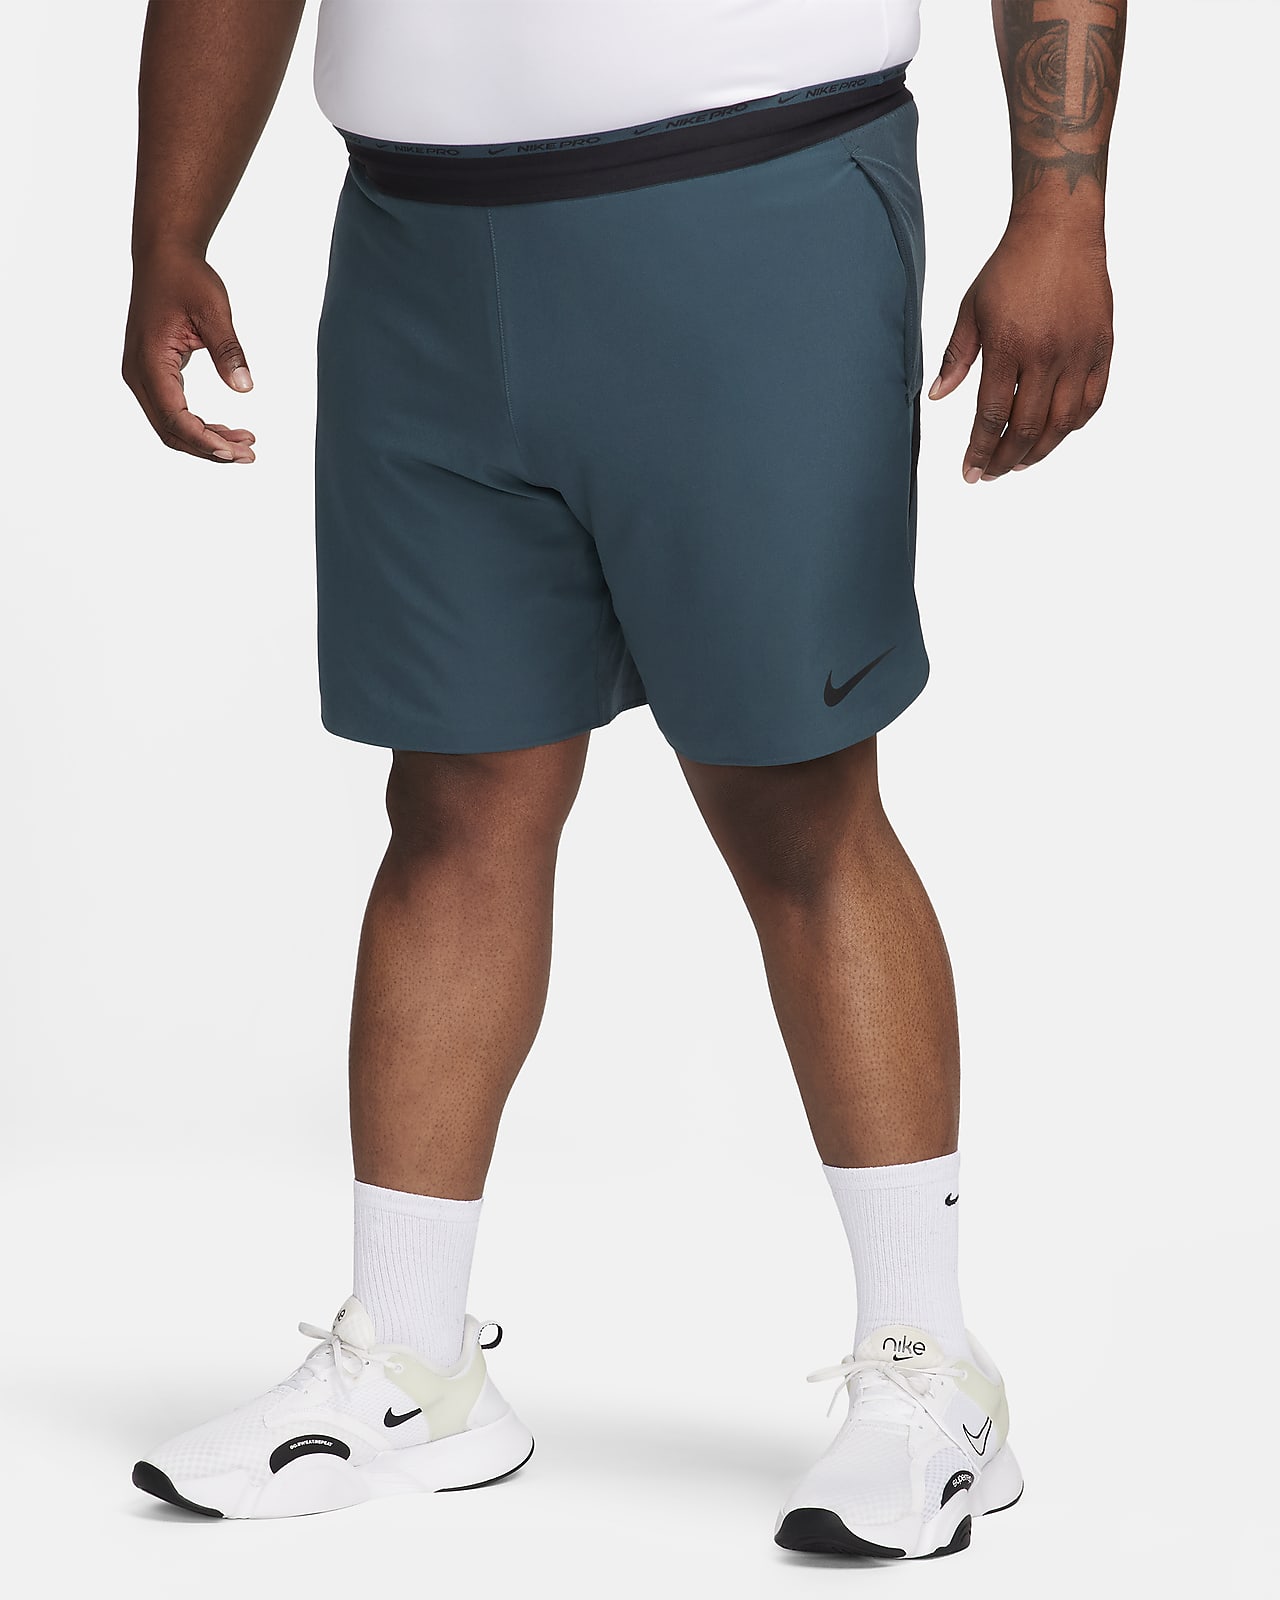 Nike Pro Training Flex 6 inch shorts in black